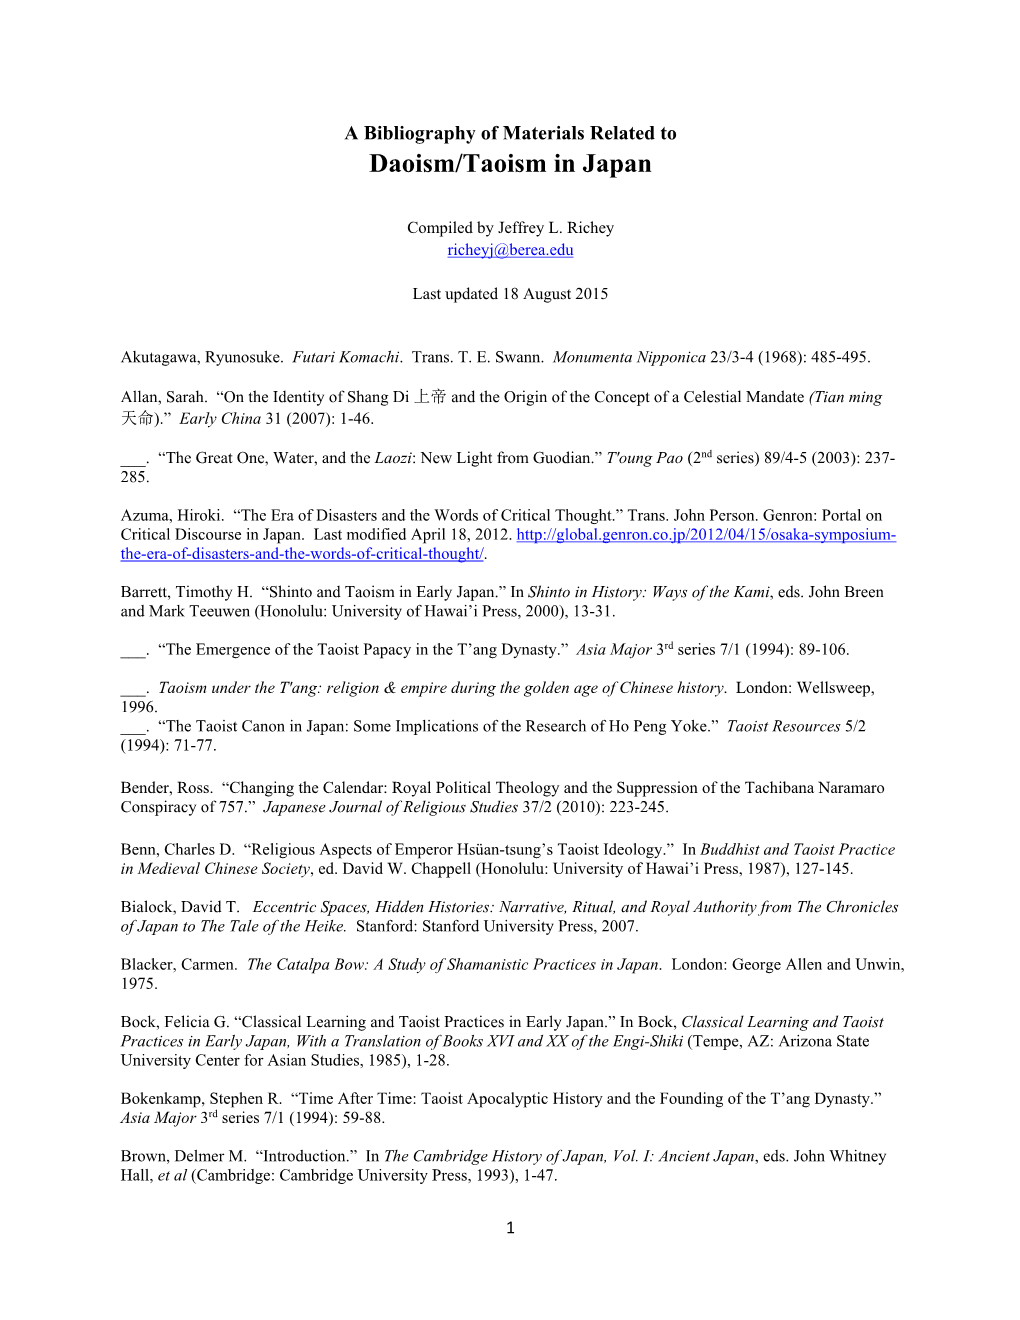 Daoism/Taoism in Japan